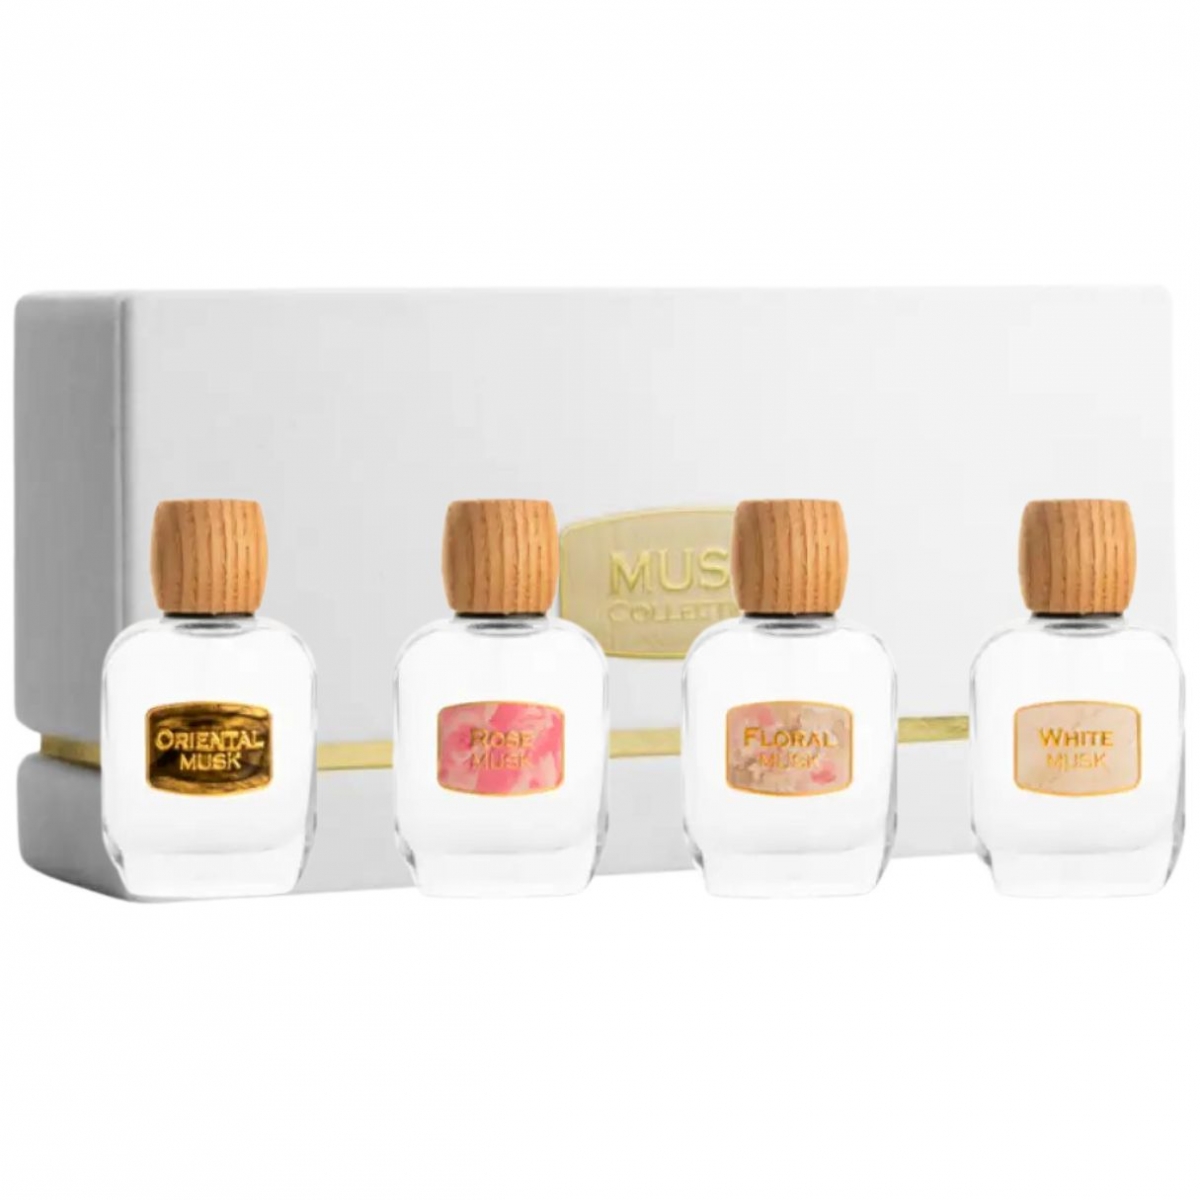 Musk Collection Junaid Perfumes Perfumes, Profumi Unisex, Arada Perfumes